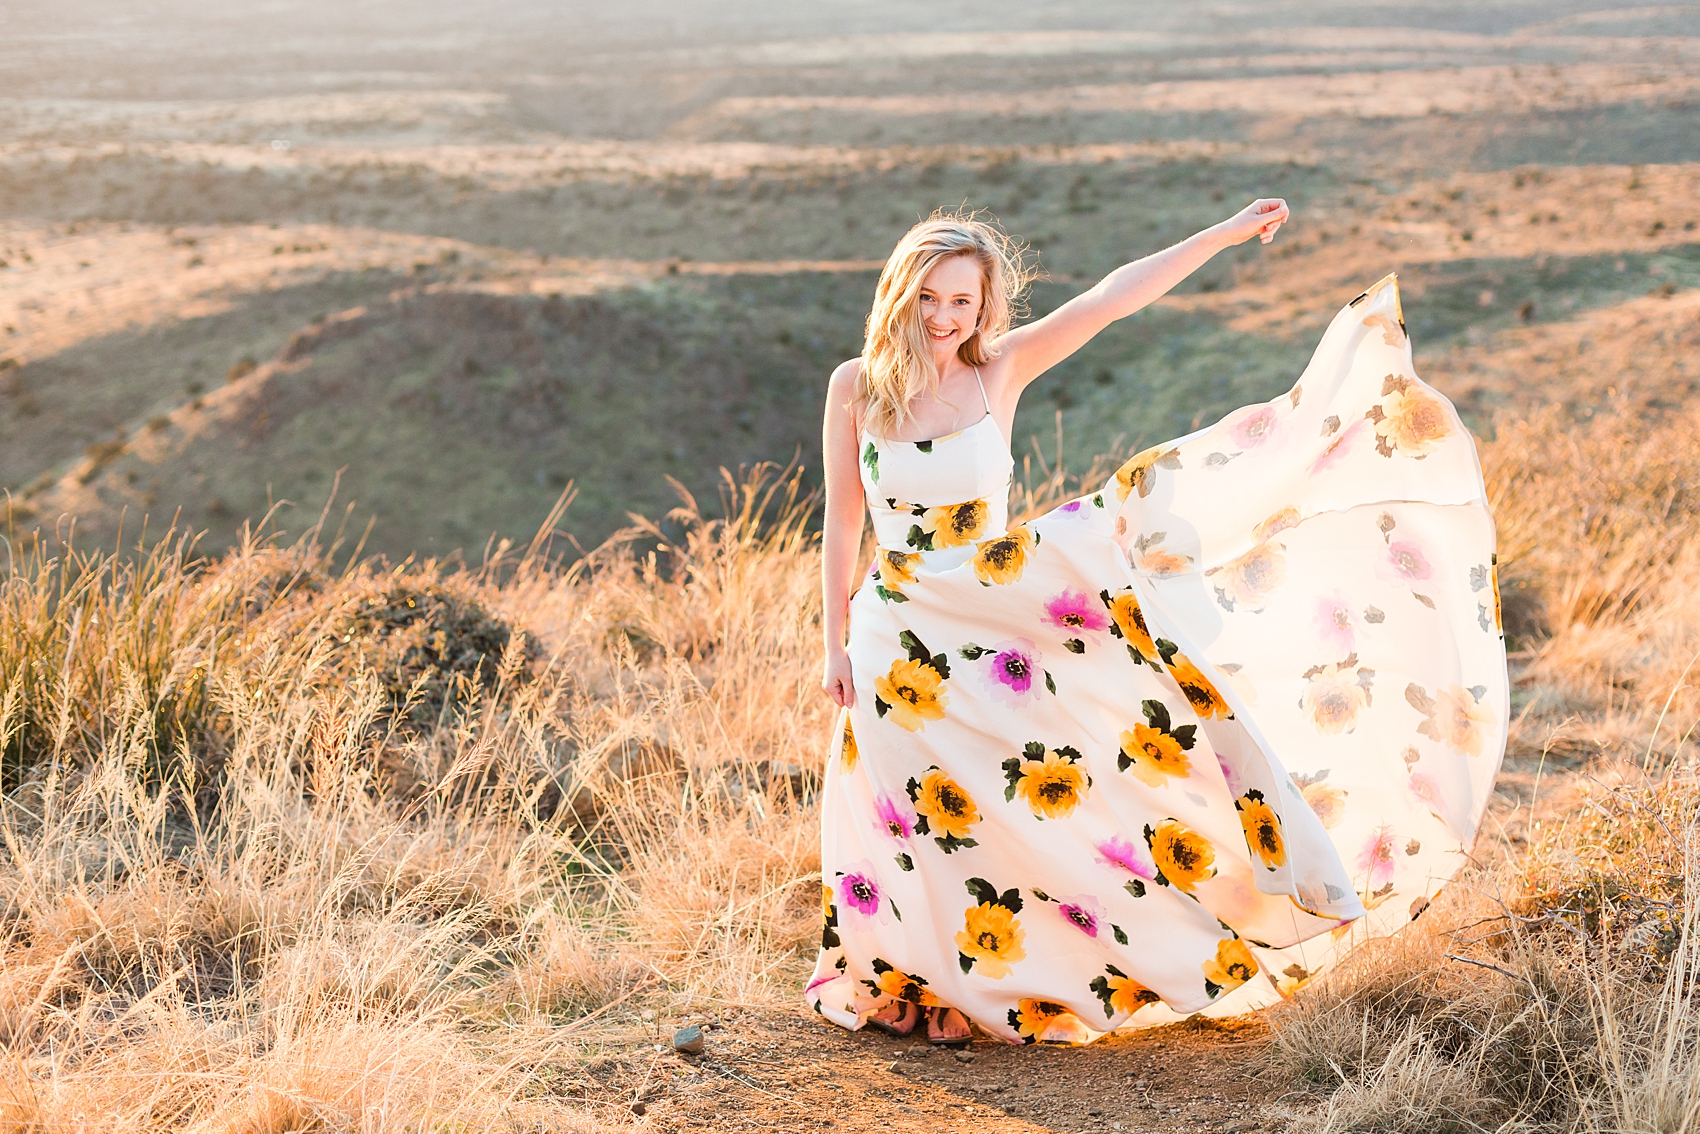 Leah Hope Photography | Scottsdale Phoenix Arizona Photographer | Humboldt Mountain Top | Desert Landscape | Mountain Views | Couple Pictures | College Senior Photos | What to Wear | Couple Poses | Senior Boy Girl Poses